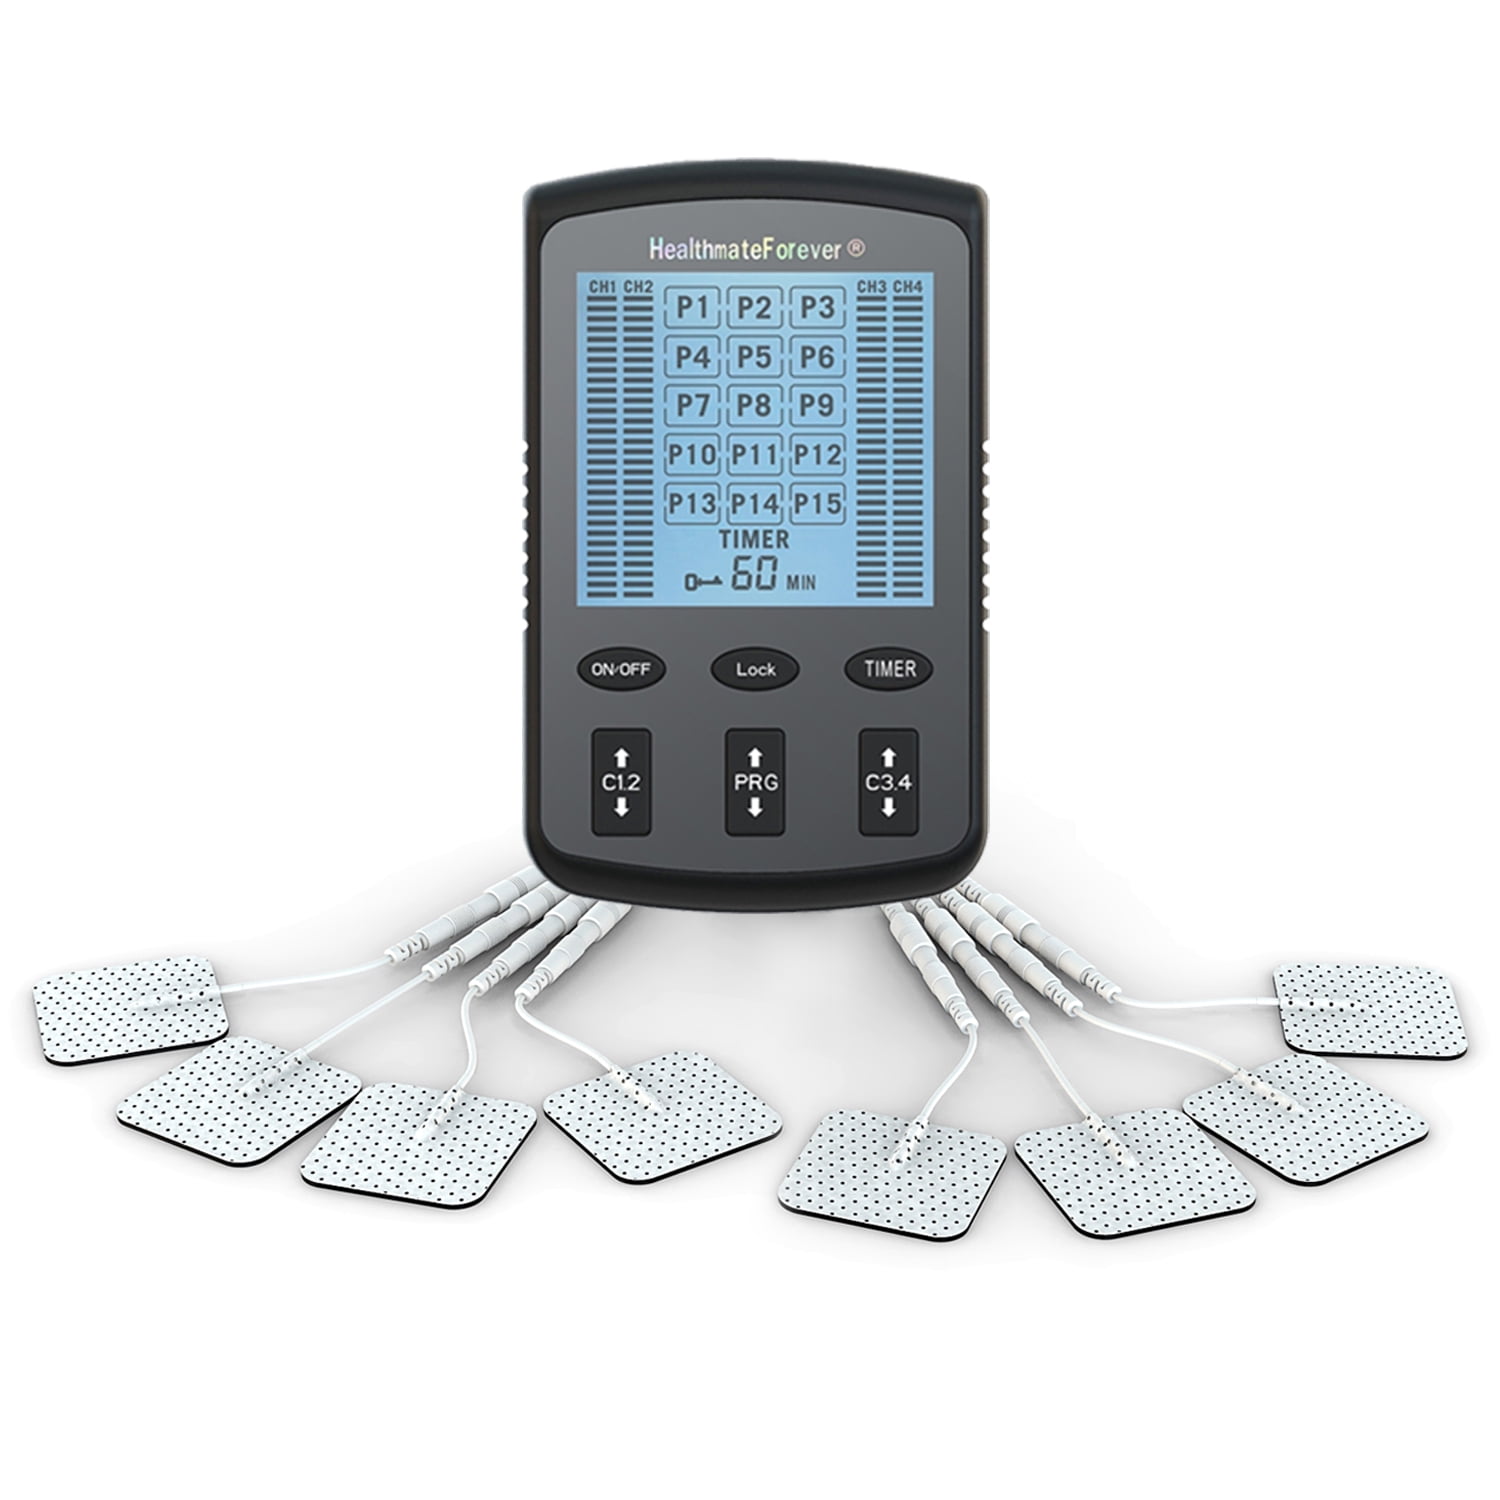 co2crea HealthmateForever YK15AB TENS Unit Electronic Pulse Massager  Massager device Massager - co2crea 